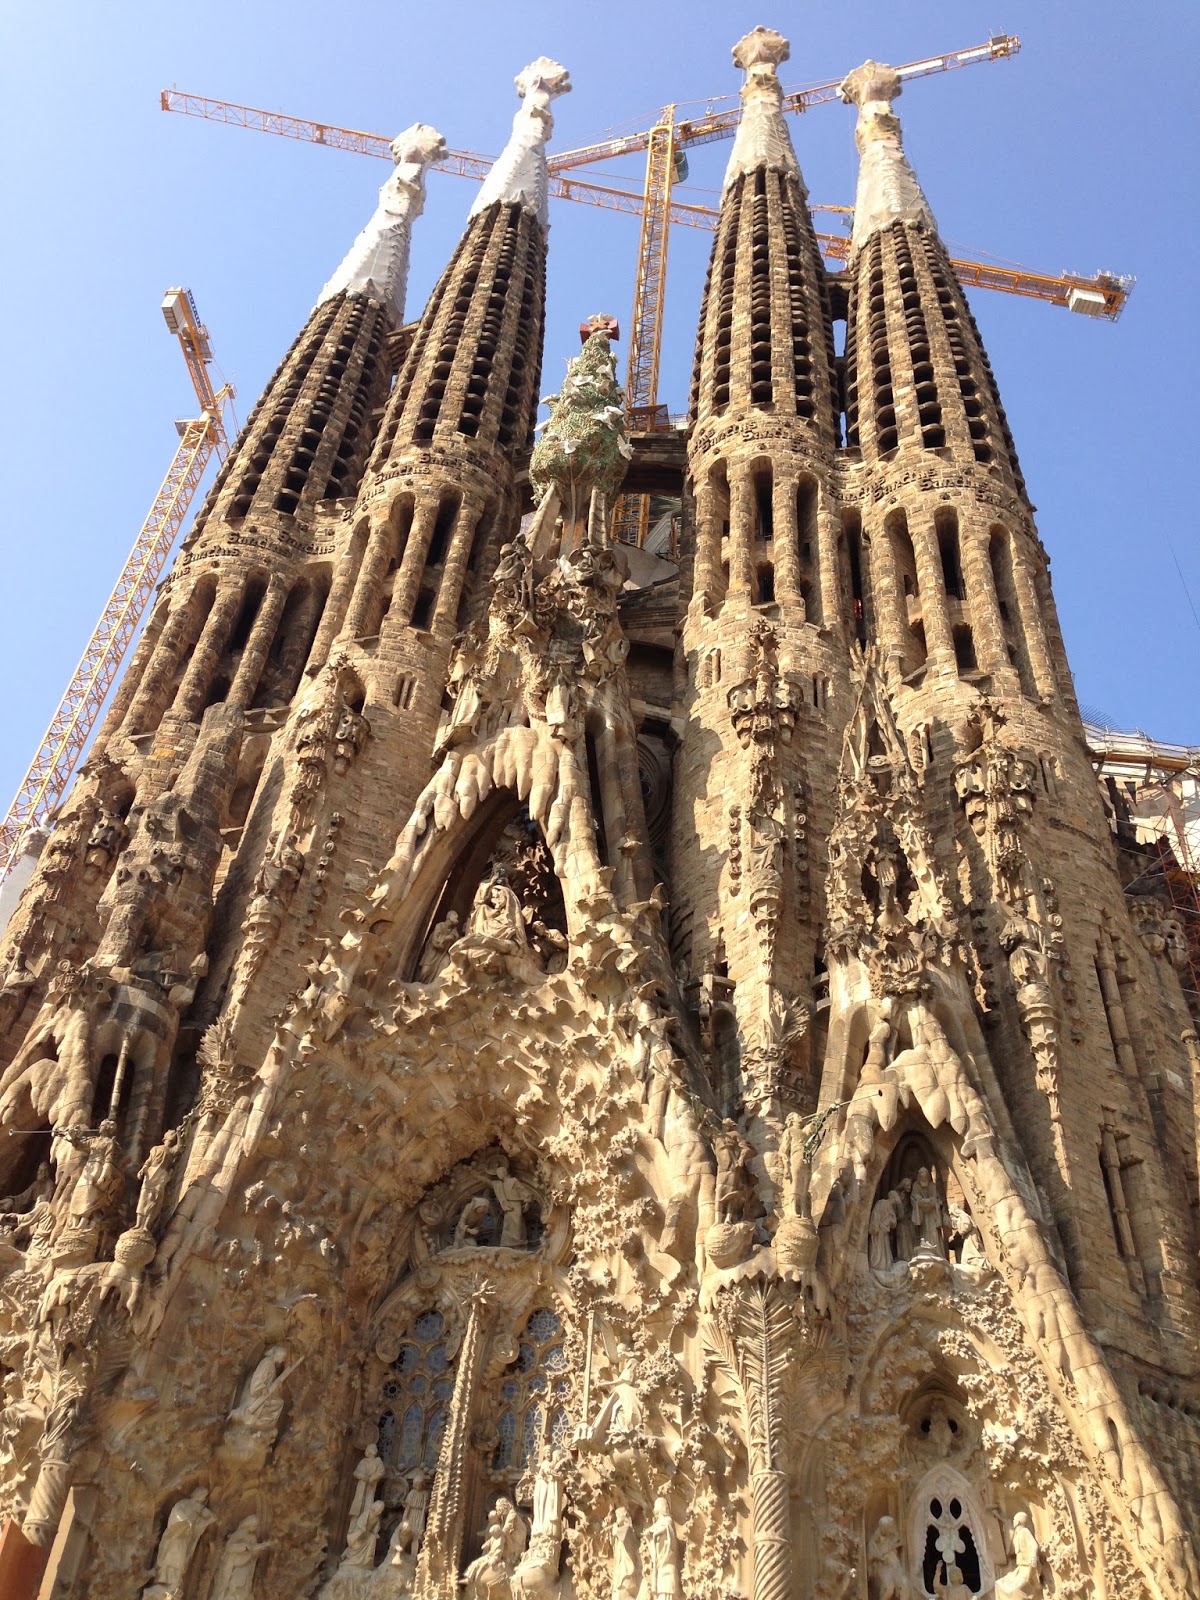 Samy and UNESCO: Works of Antoni Gaudí